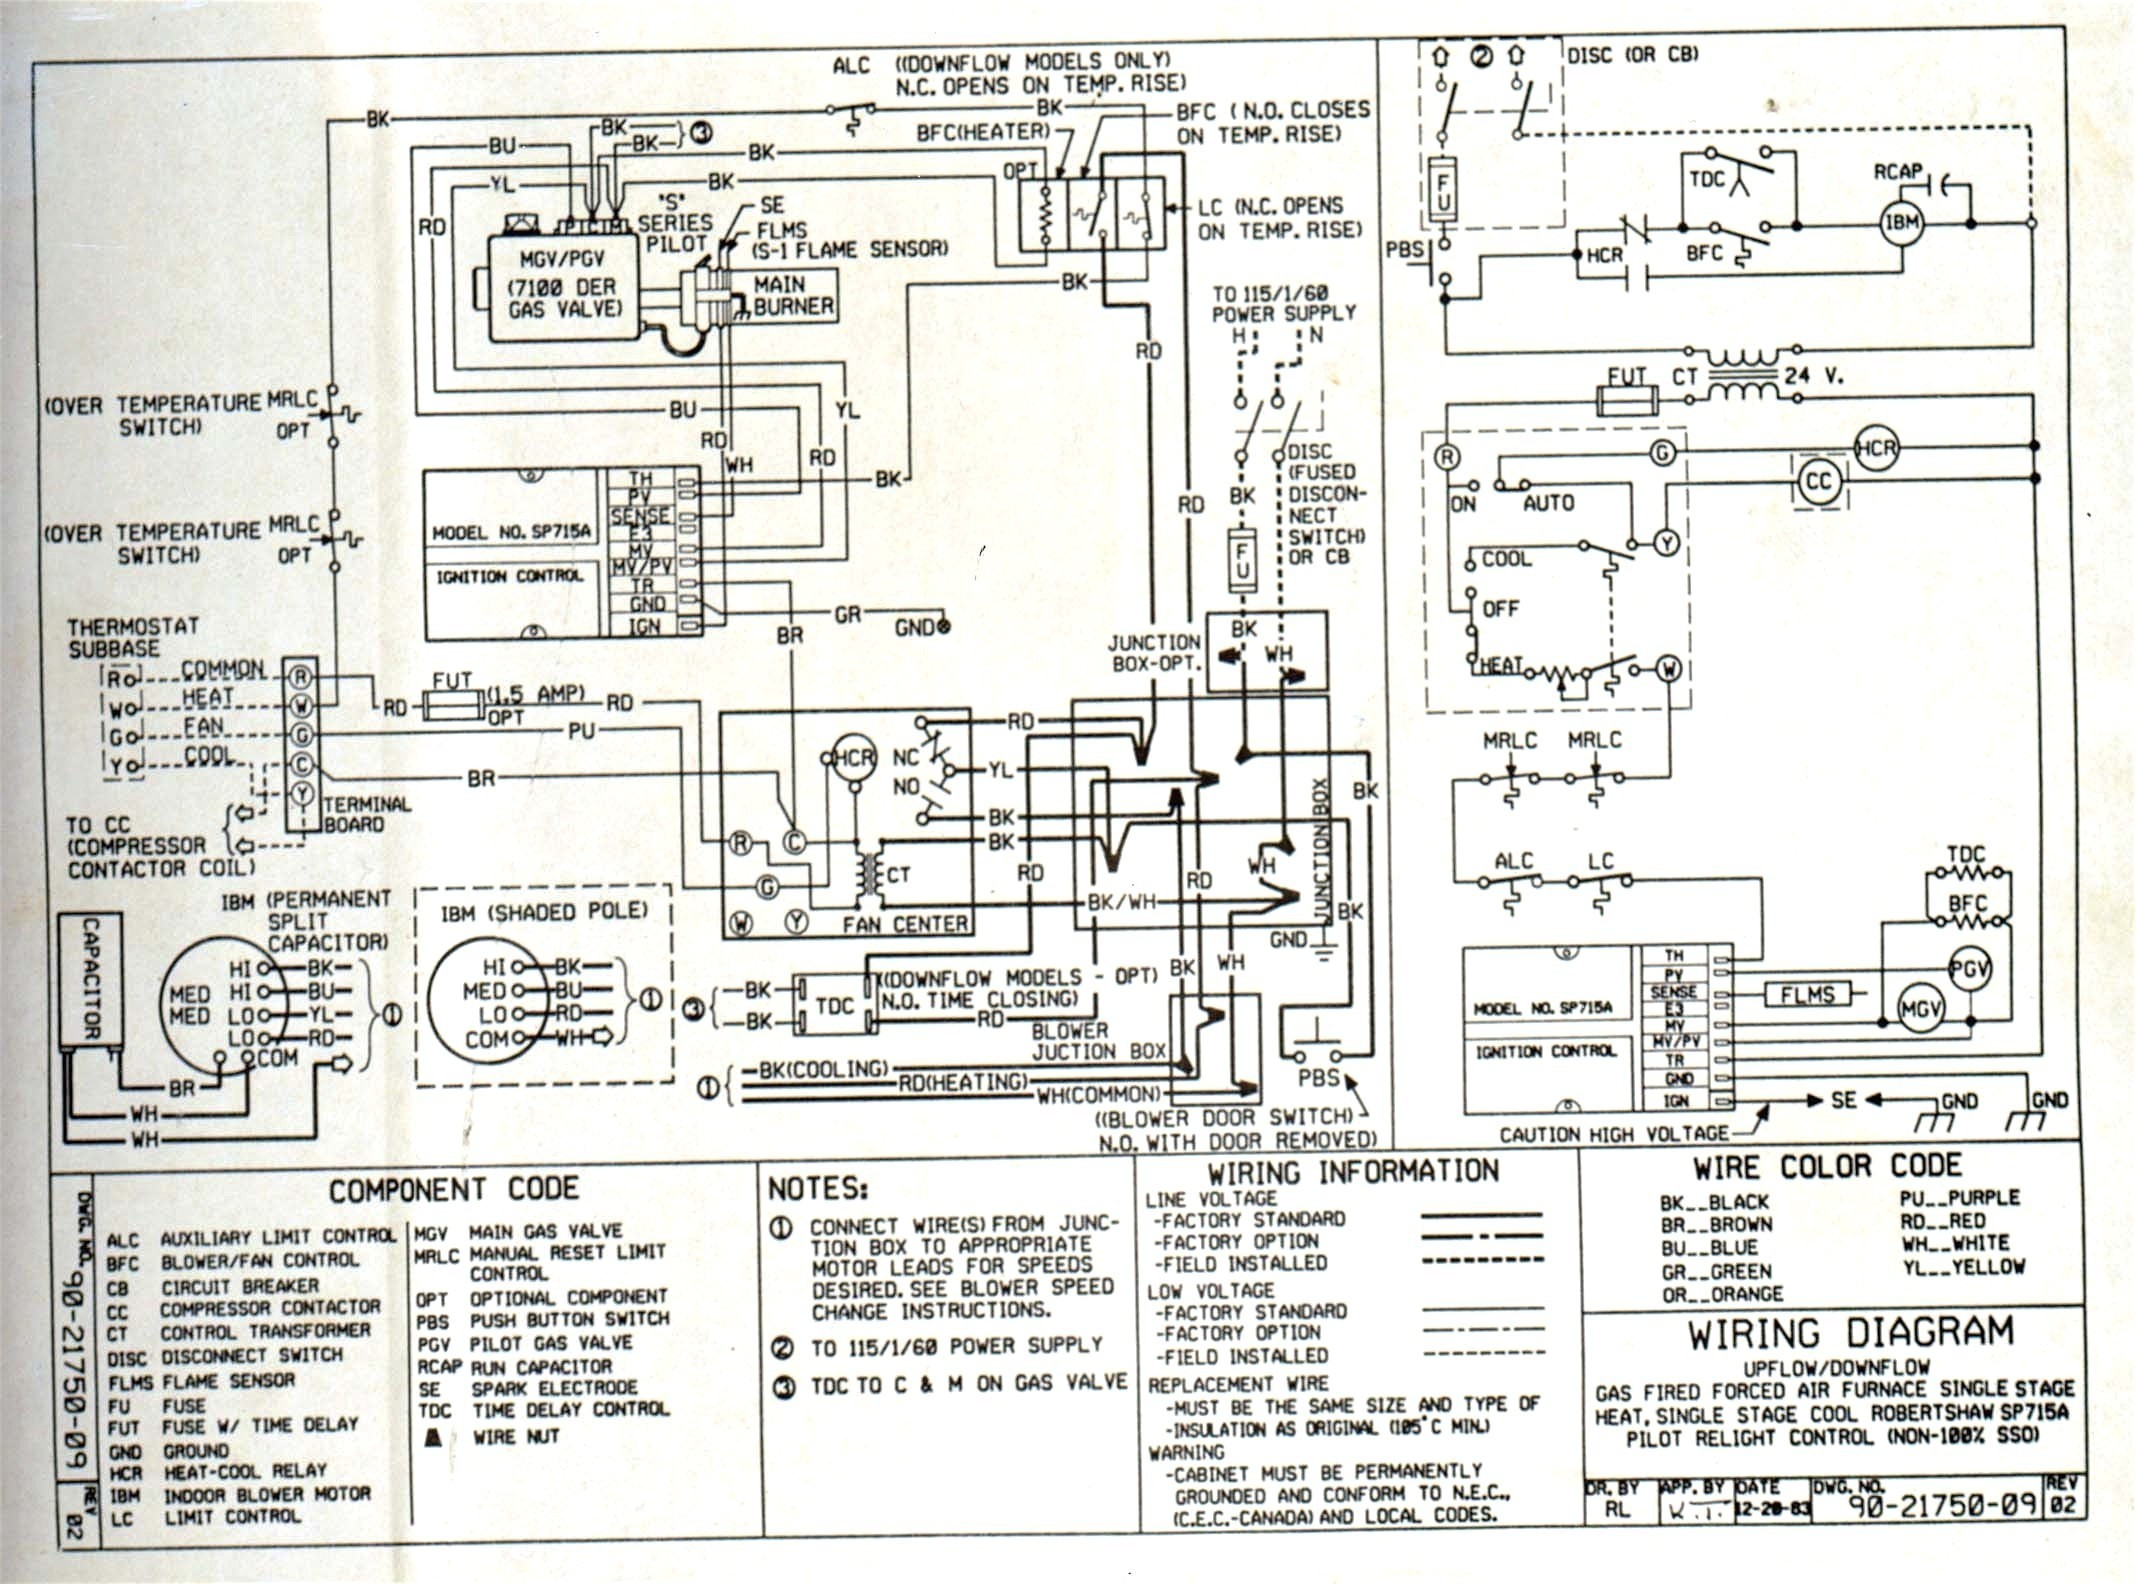 Gas Solenoid Valve Wiring Diagram Reference Gas Solenoid Valve Wiring Diagram Free Downloads Wiring Diagram Air